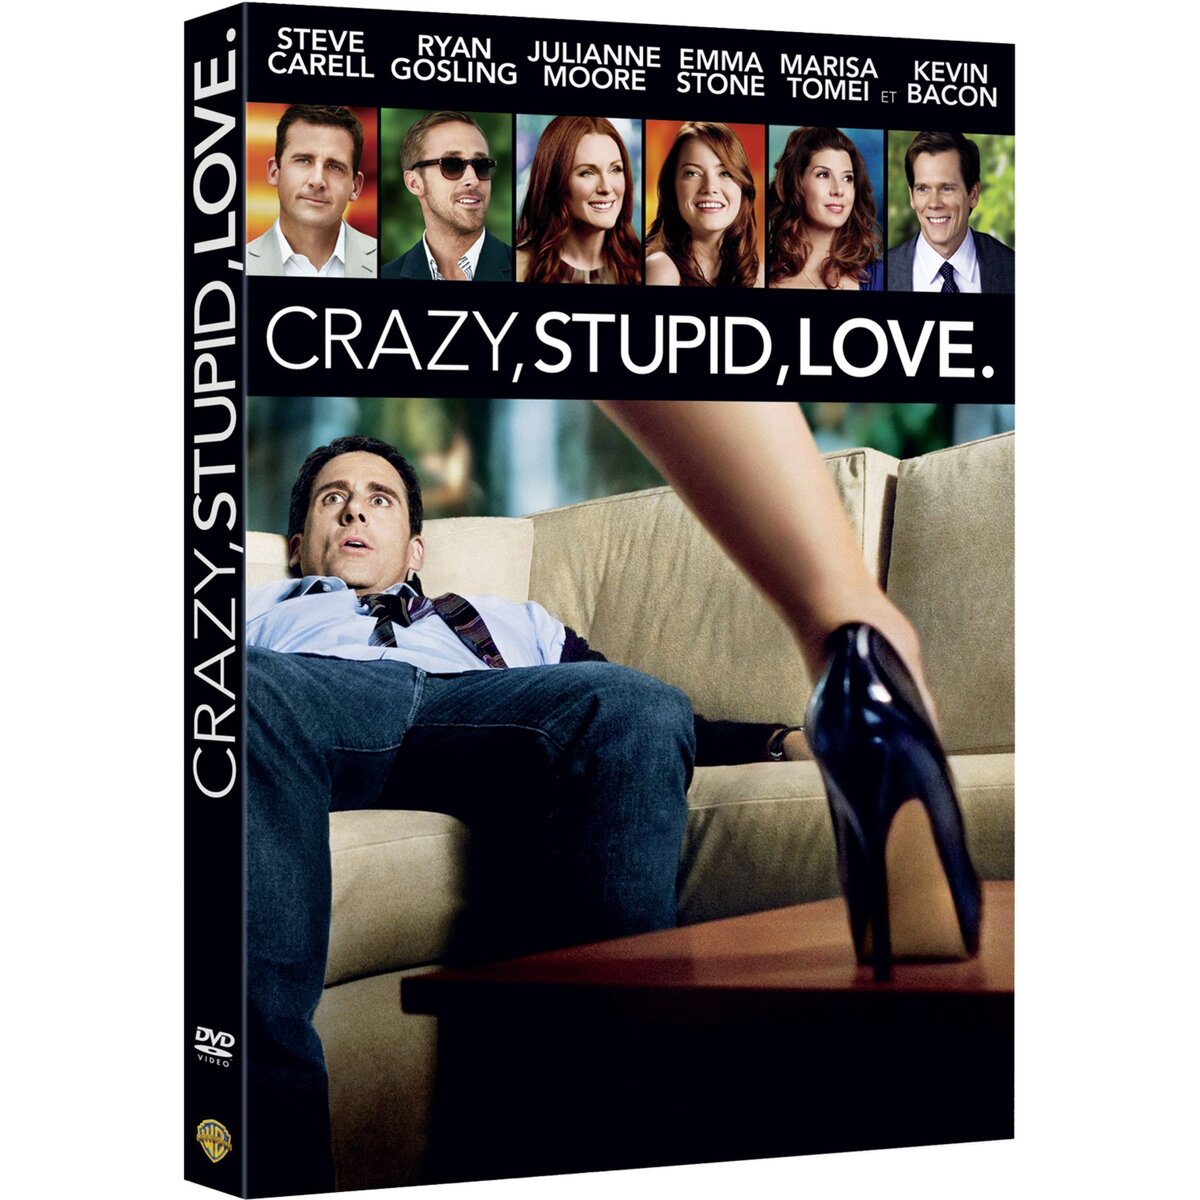 Cray stupid love - dvd x1 1 pièce